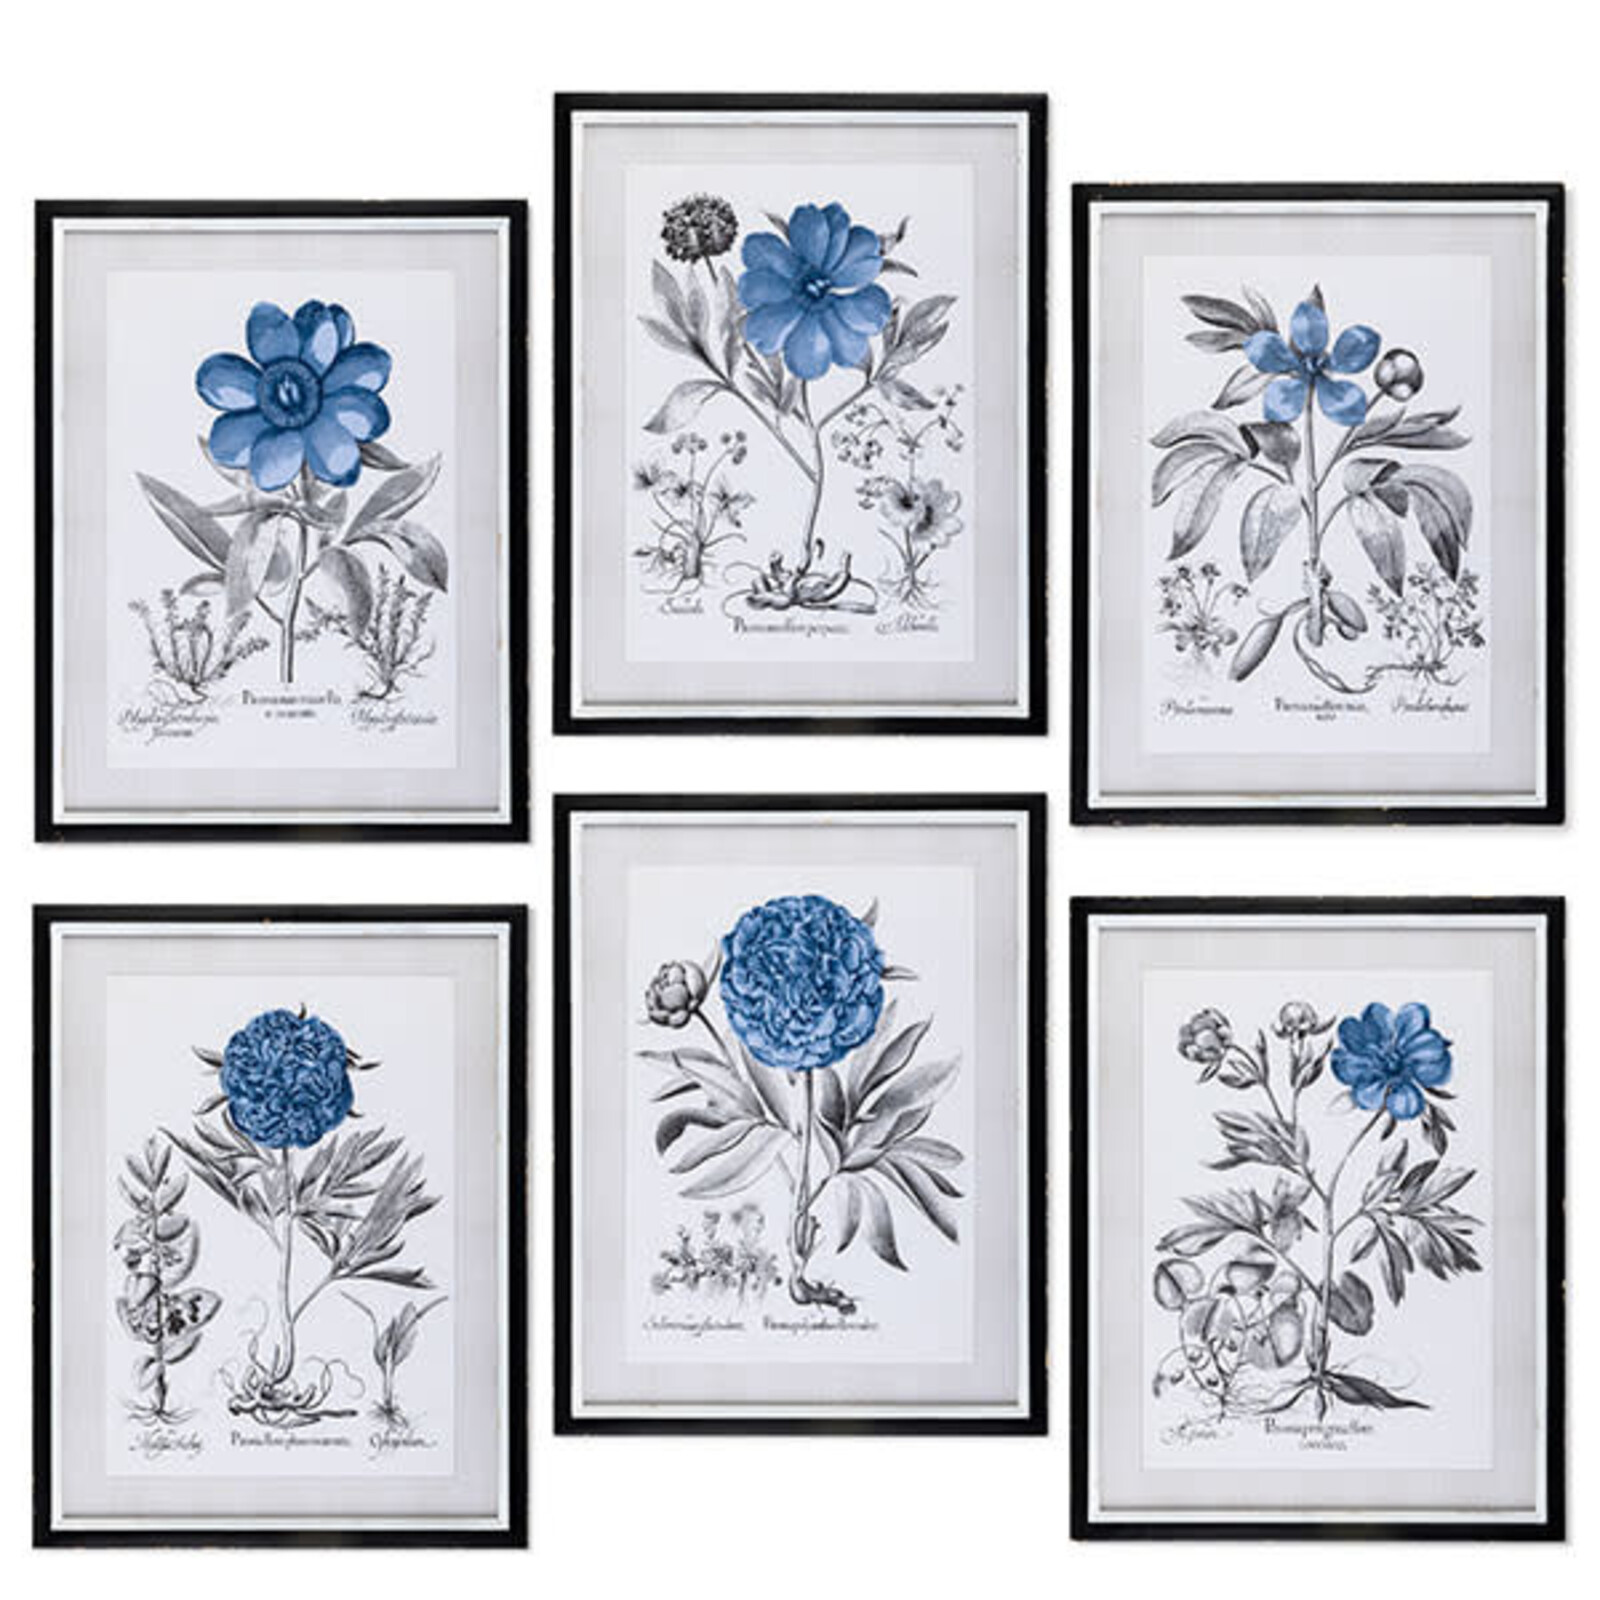 Gerson Framed Botanical Floral Print Wall Art   95735 loading=